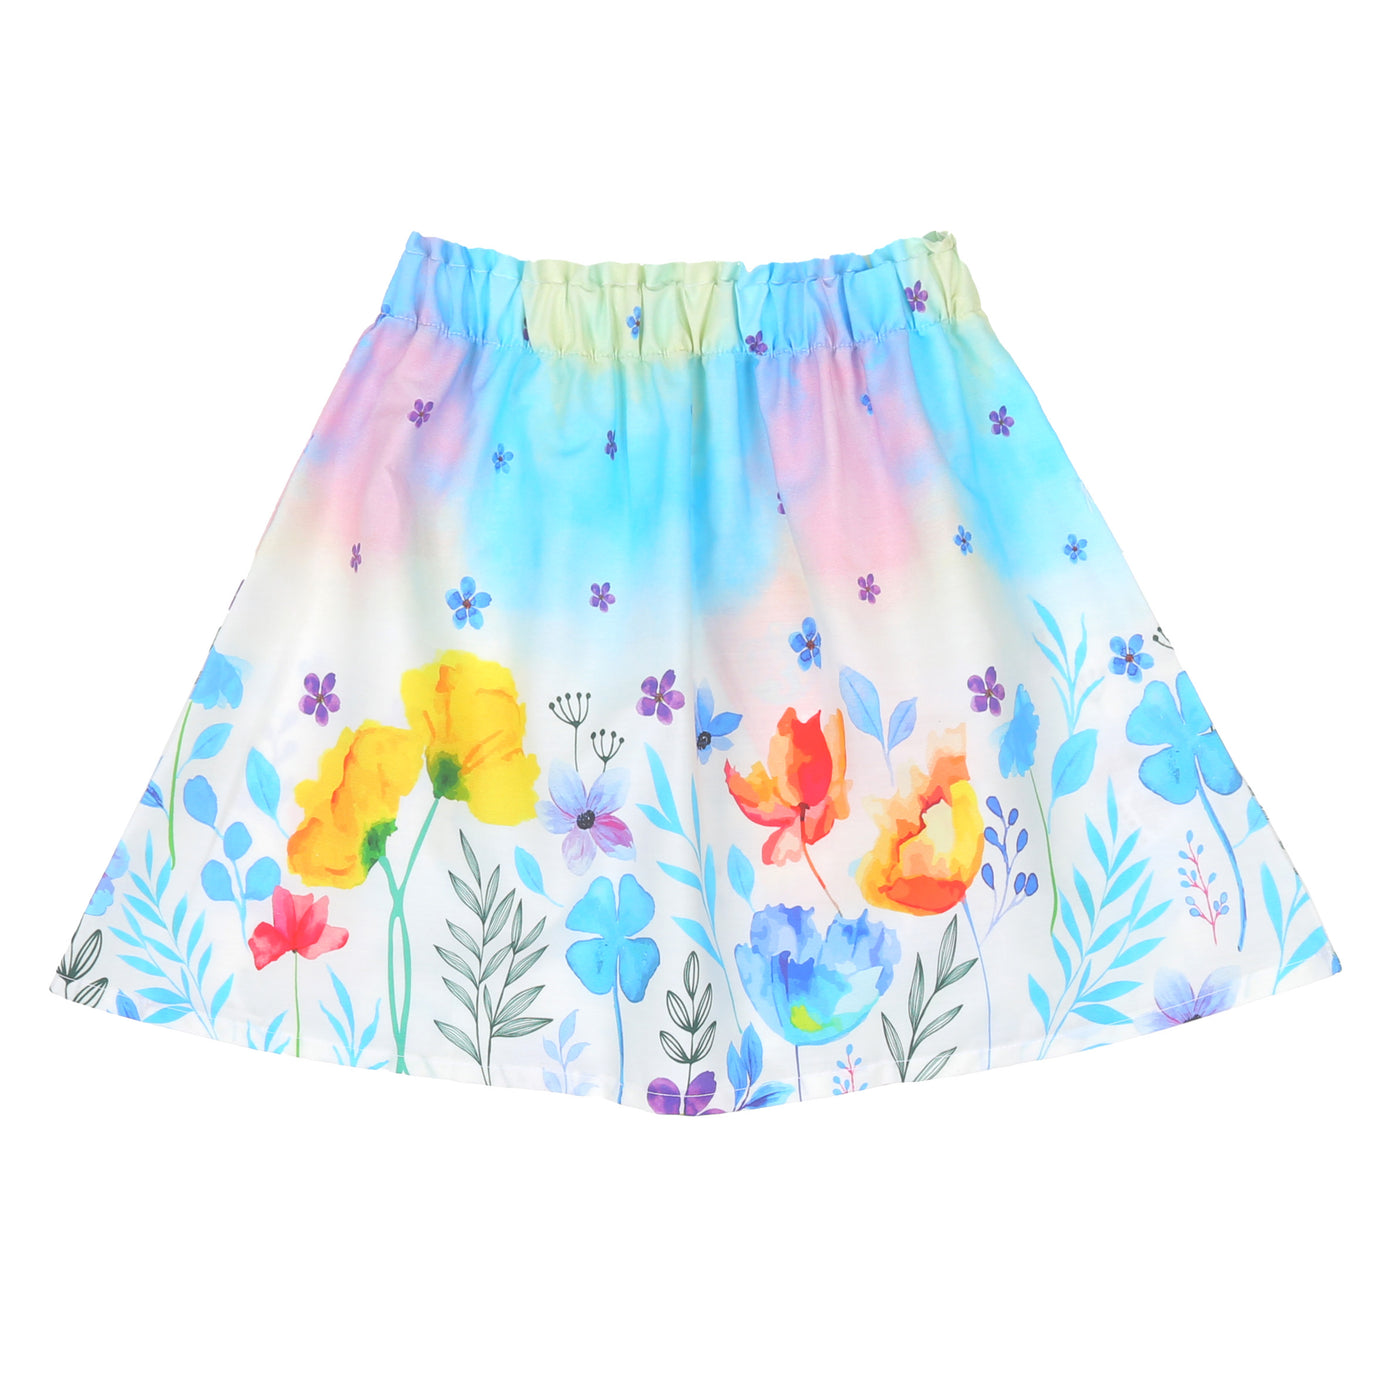 Girls Digital Print Short Skirt Cotton Candy - Multi